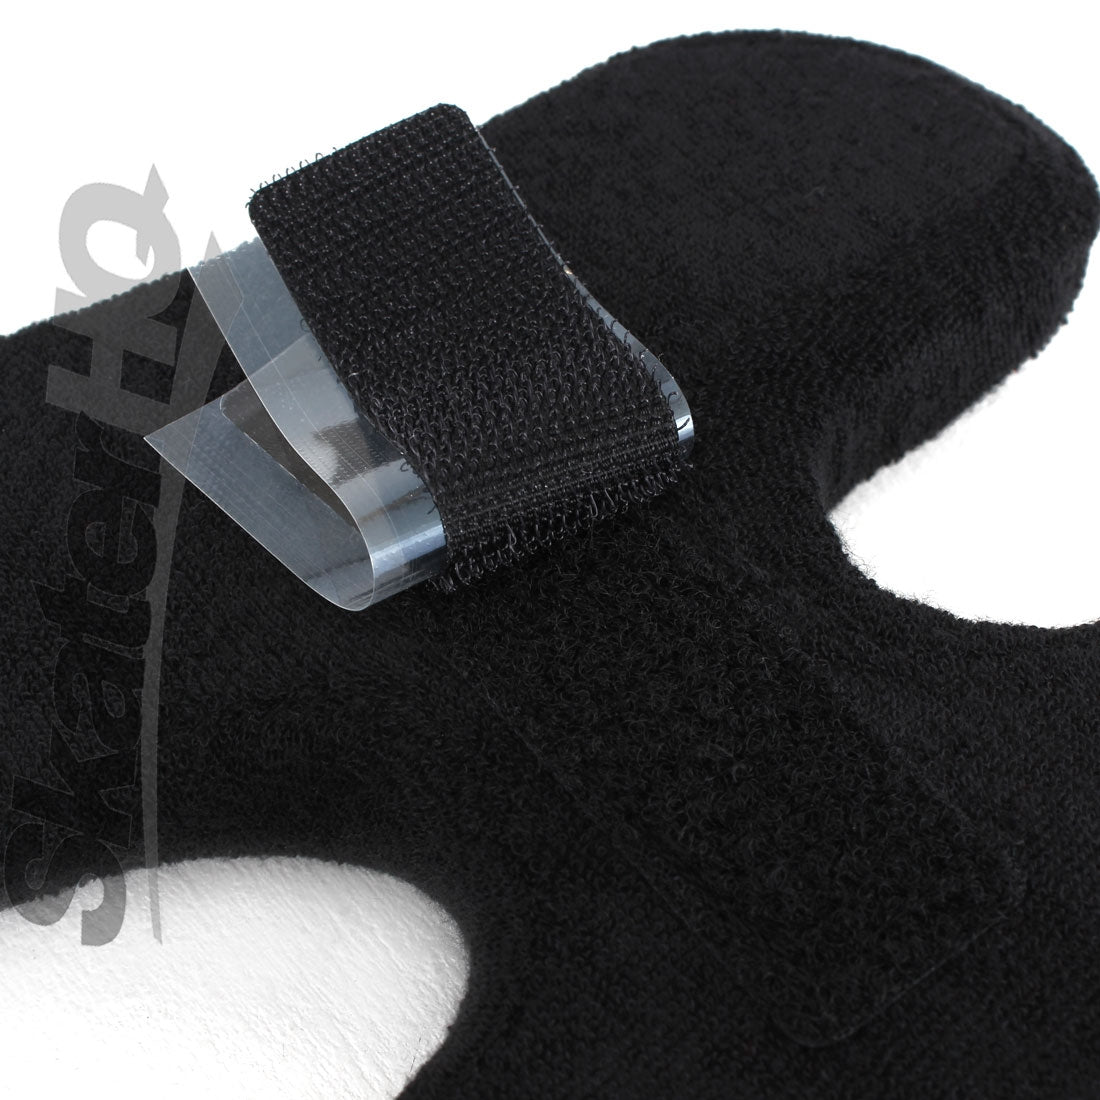 Triple 8 Sweatsaver Liner Black - XSmall Helmet liners